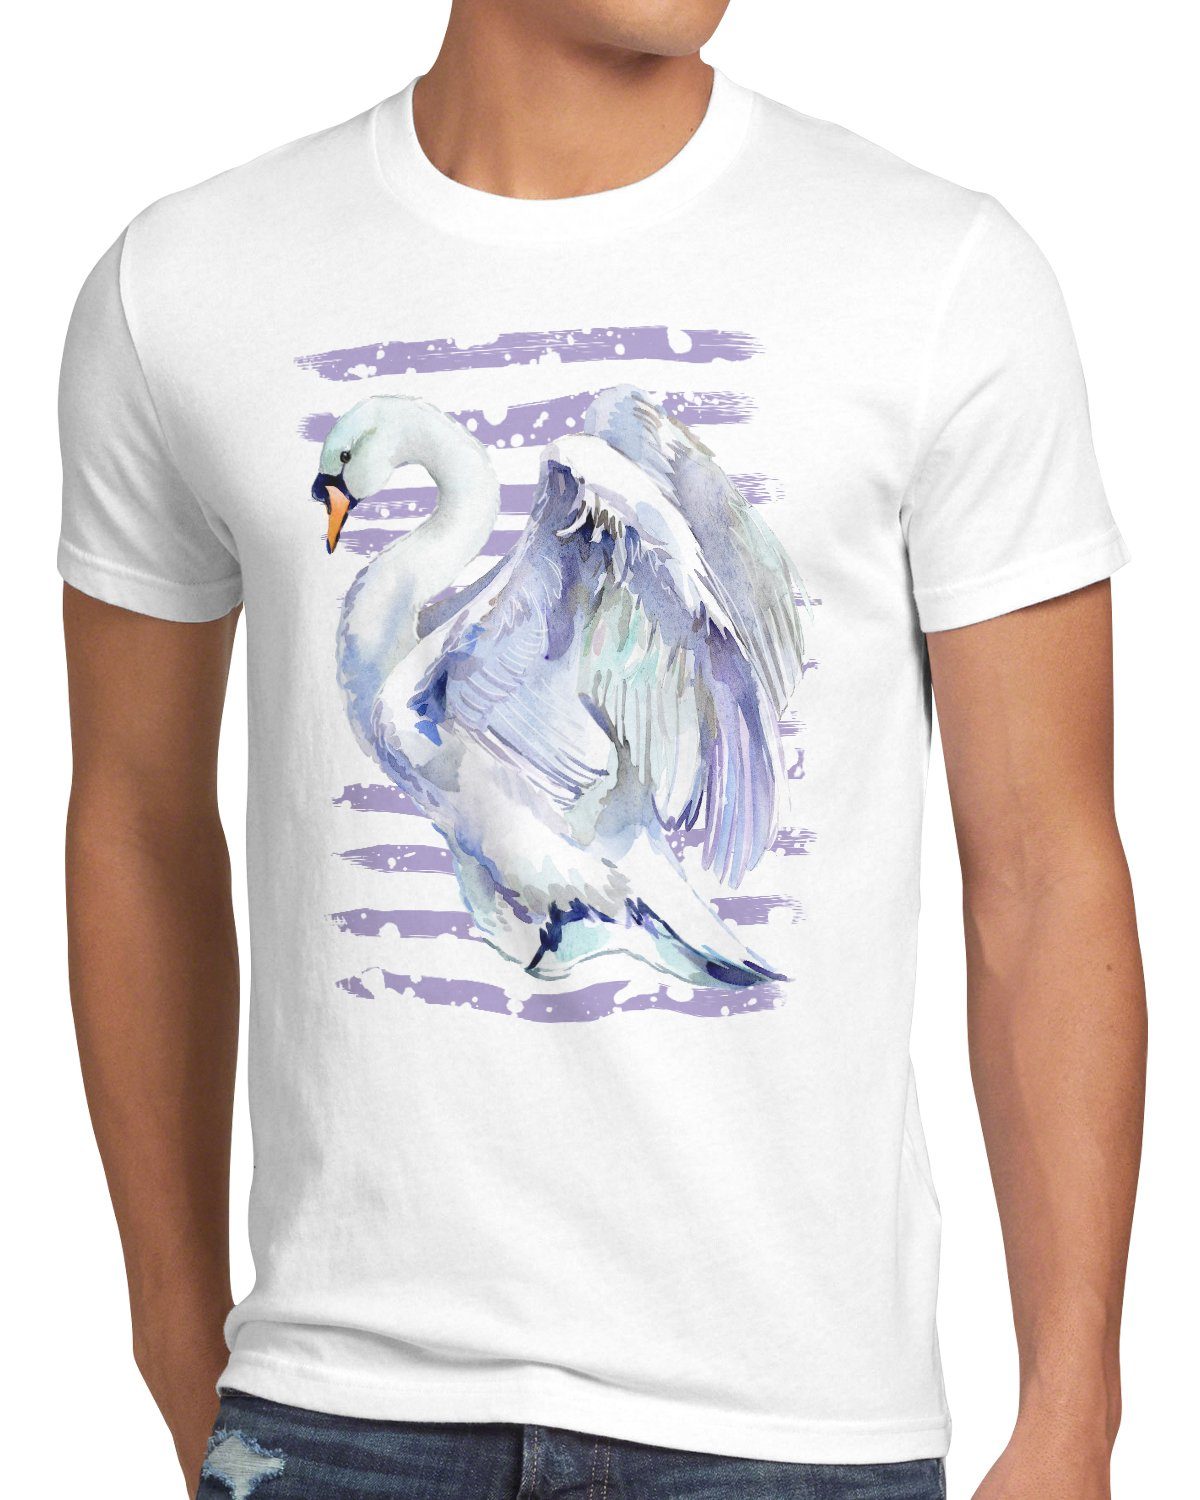 Print-Shirt T-Shirt Schwanenflug vögel Herren vogelfreund style3